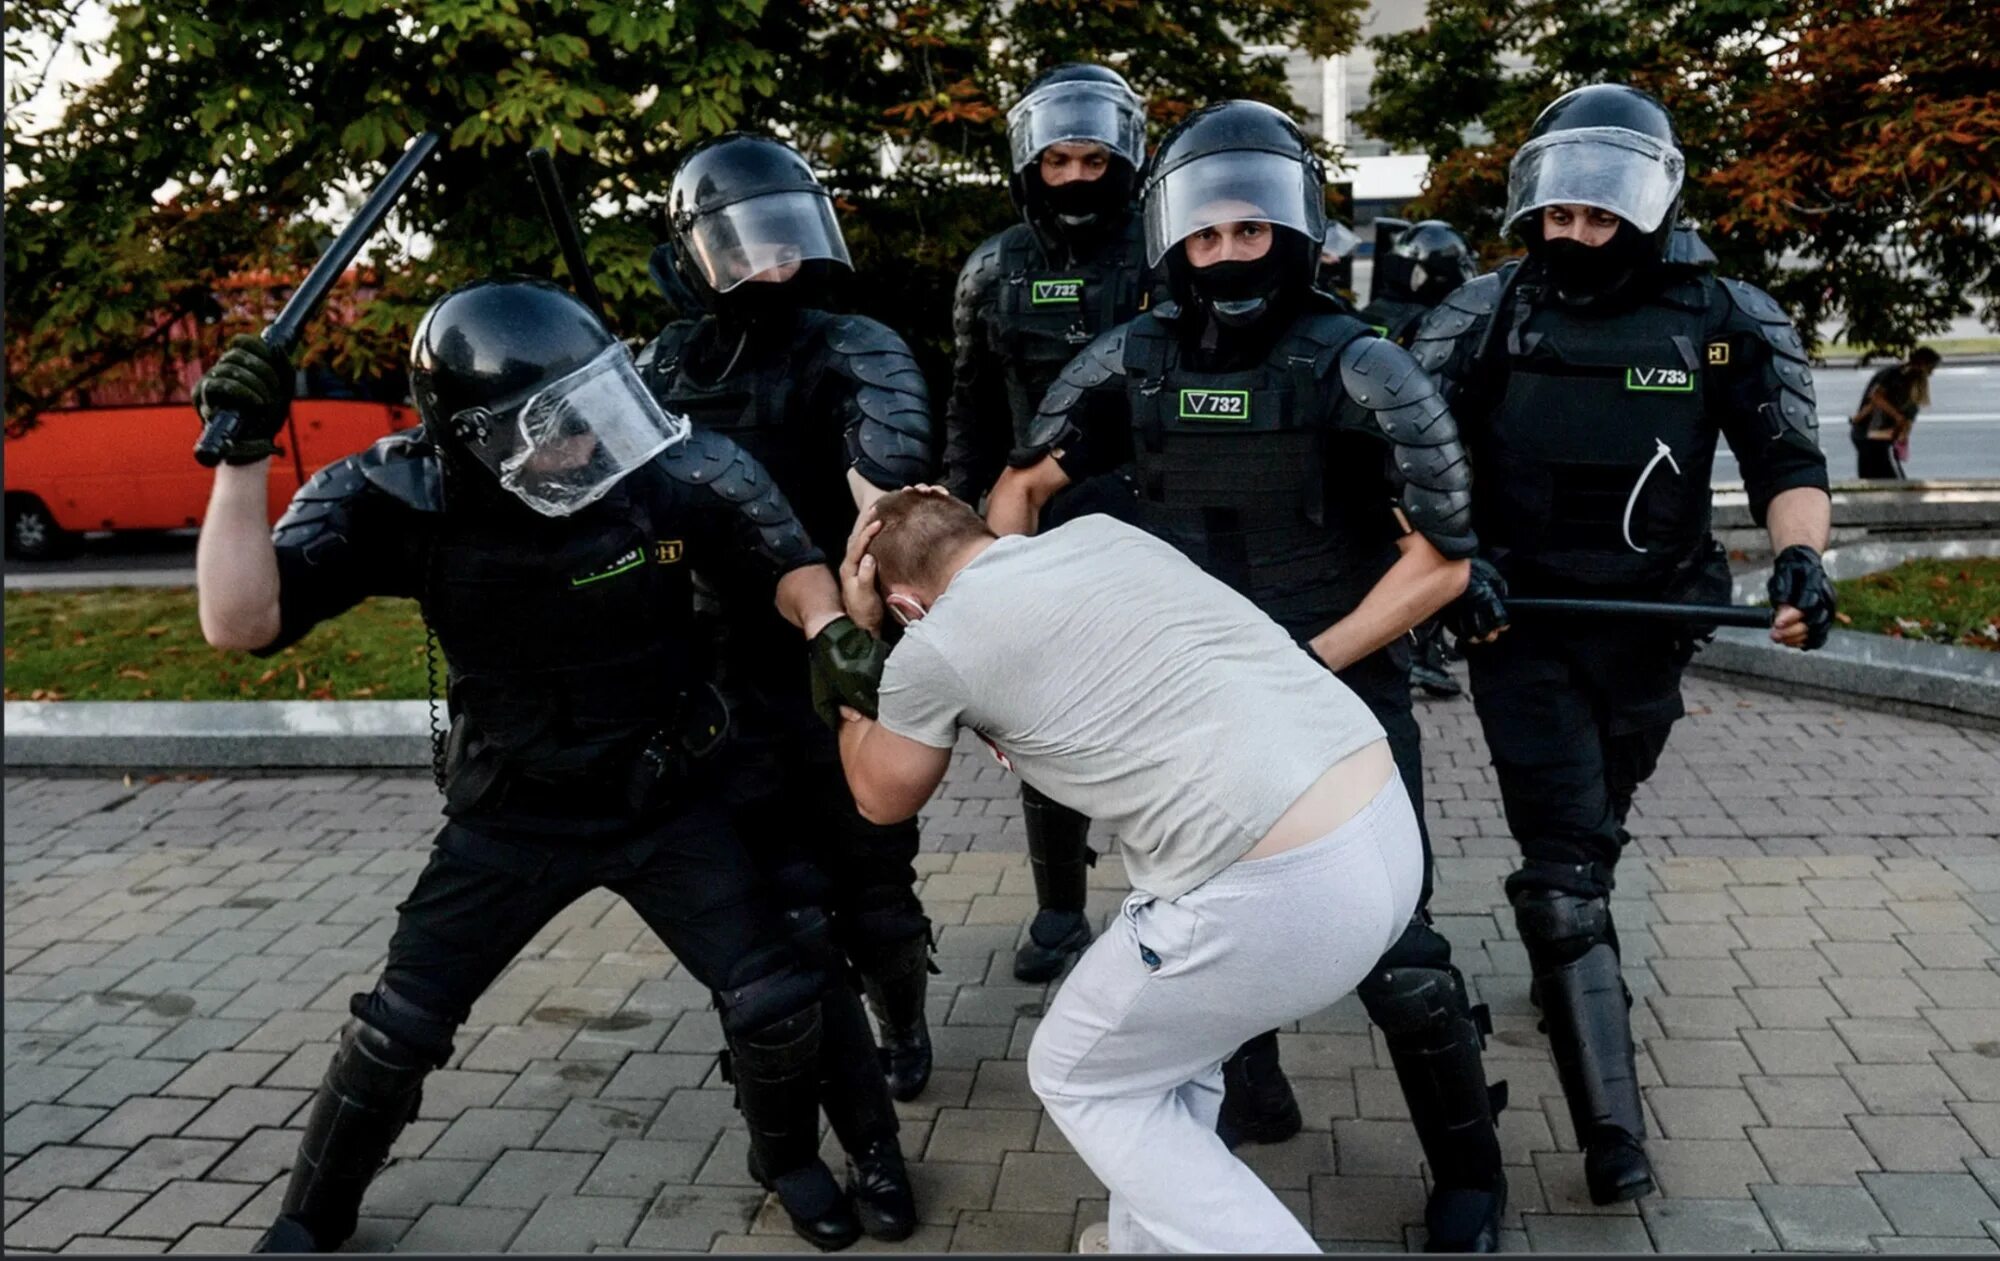 Беларусь 2020 протесты ОМОН. ОМОН митинги Беларусь 2020. Избить дубинкой